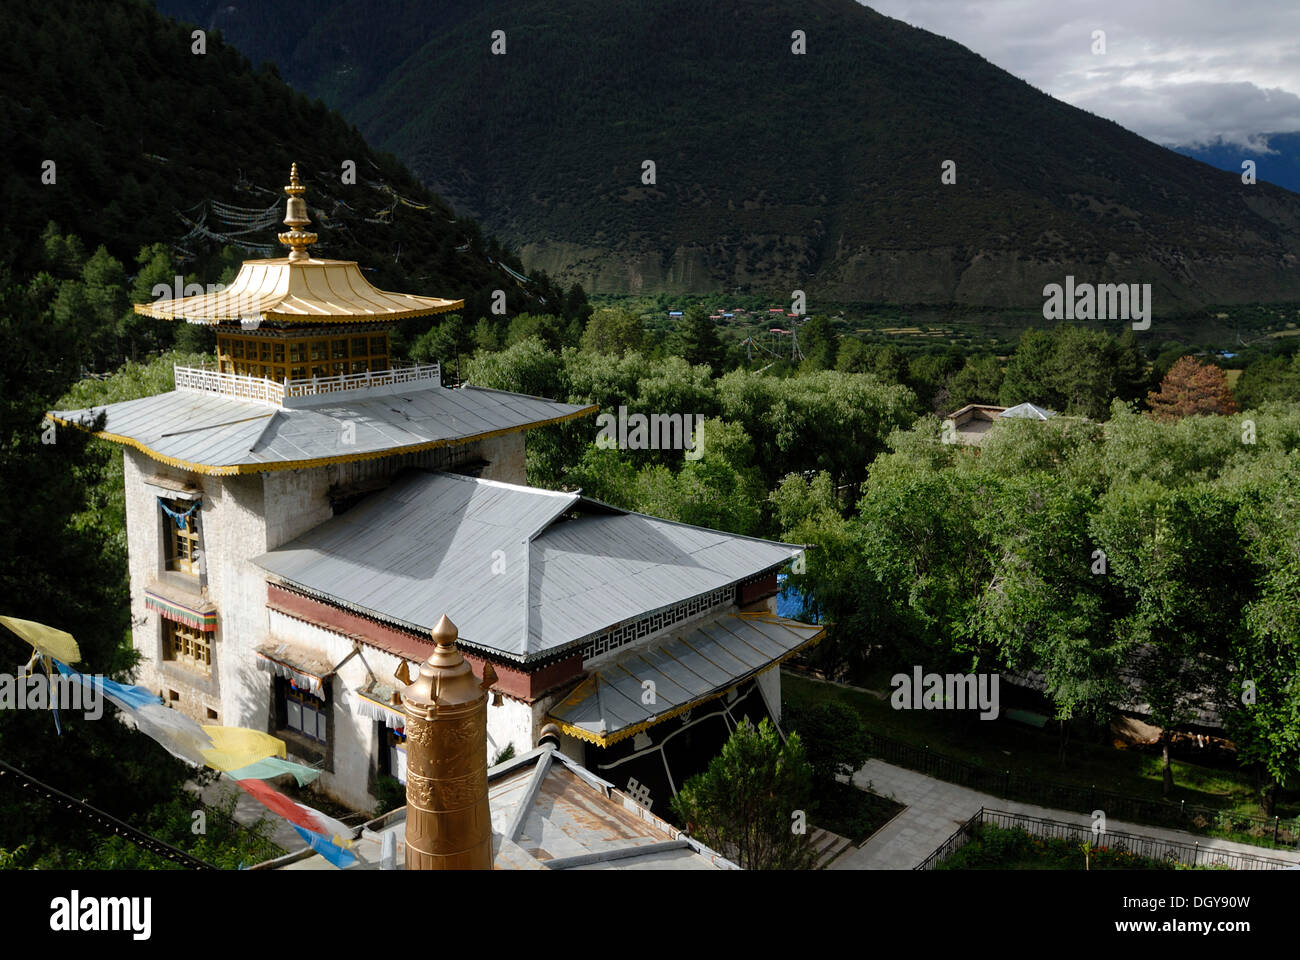 Lamaling, monasterio budista tibetano en frente de montañas boscosas del Himalaya, Nyichi, Bayi, Kongpo, Tibet oriental, China Foto de stock